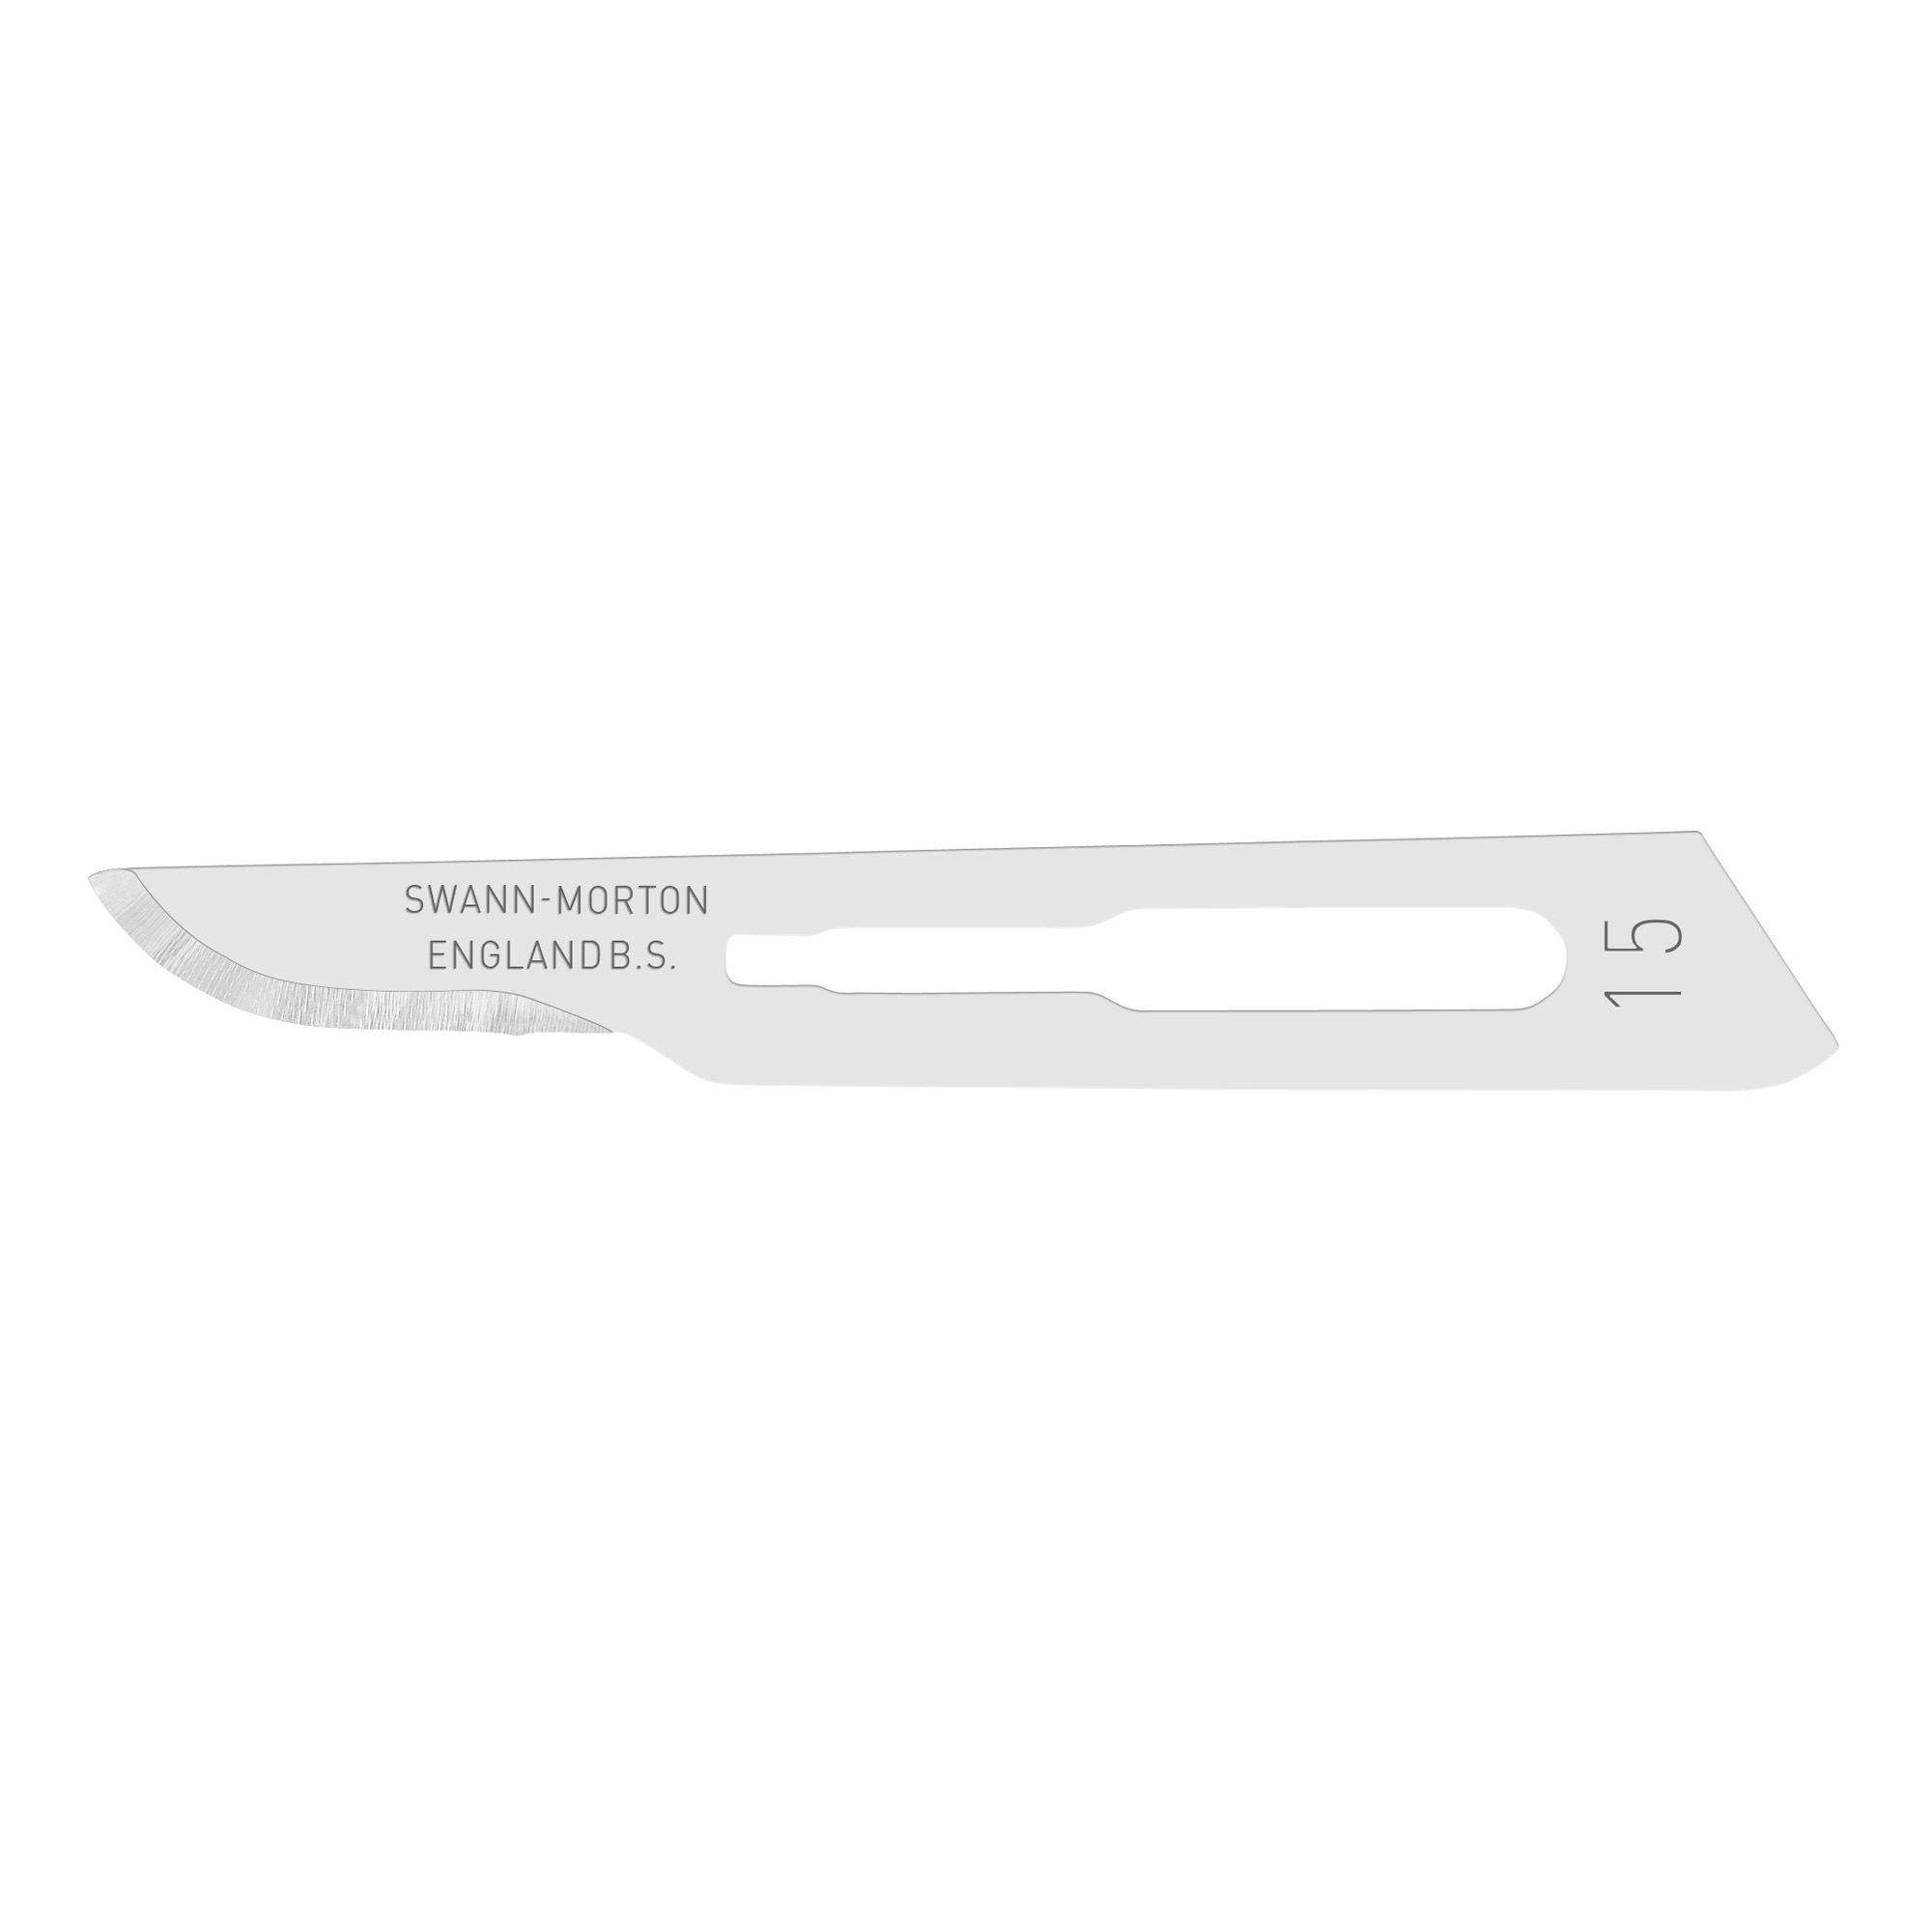 Sterile single-use professional scalpel blades Swann-Morton size 15 100 pcs